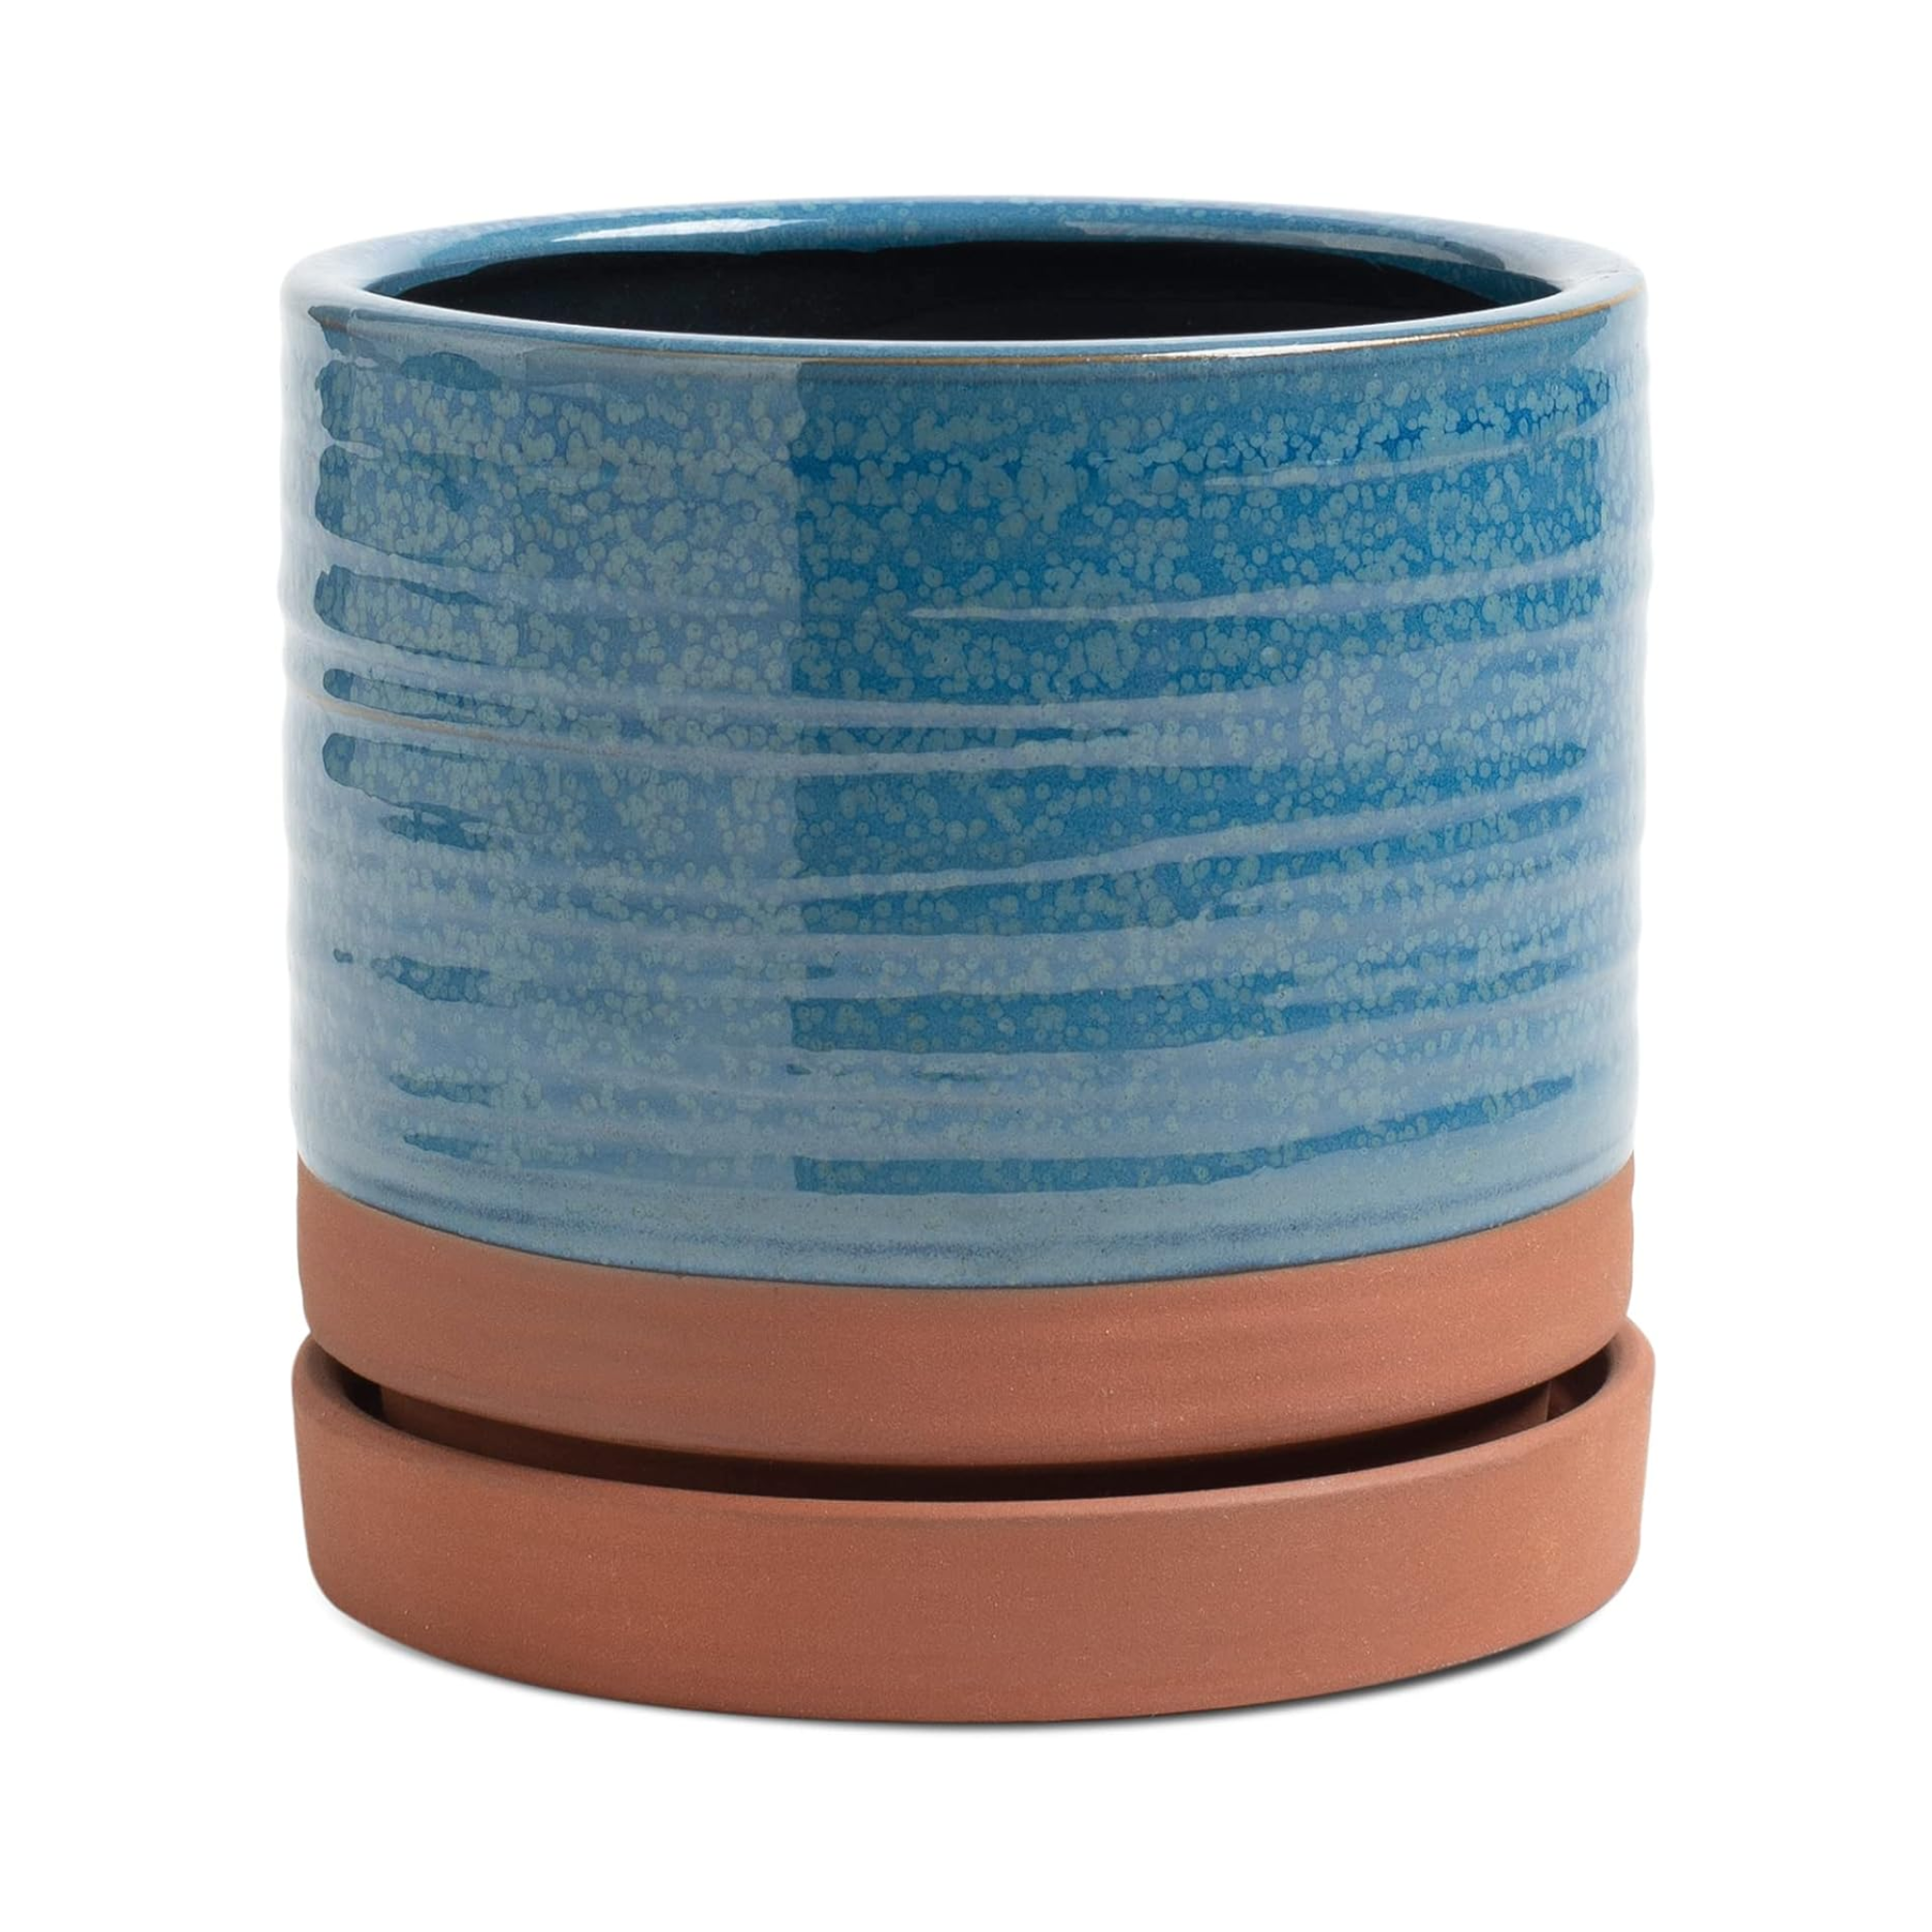 A clay planter with blue glaze